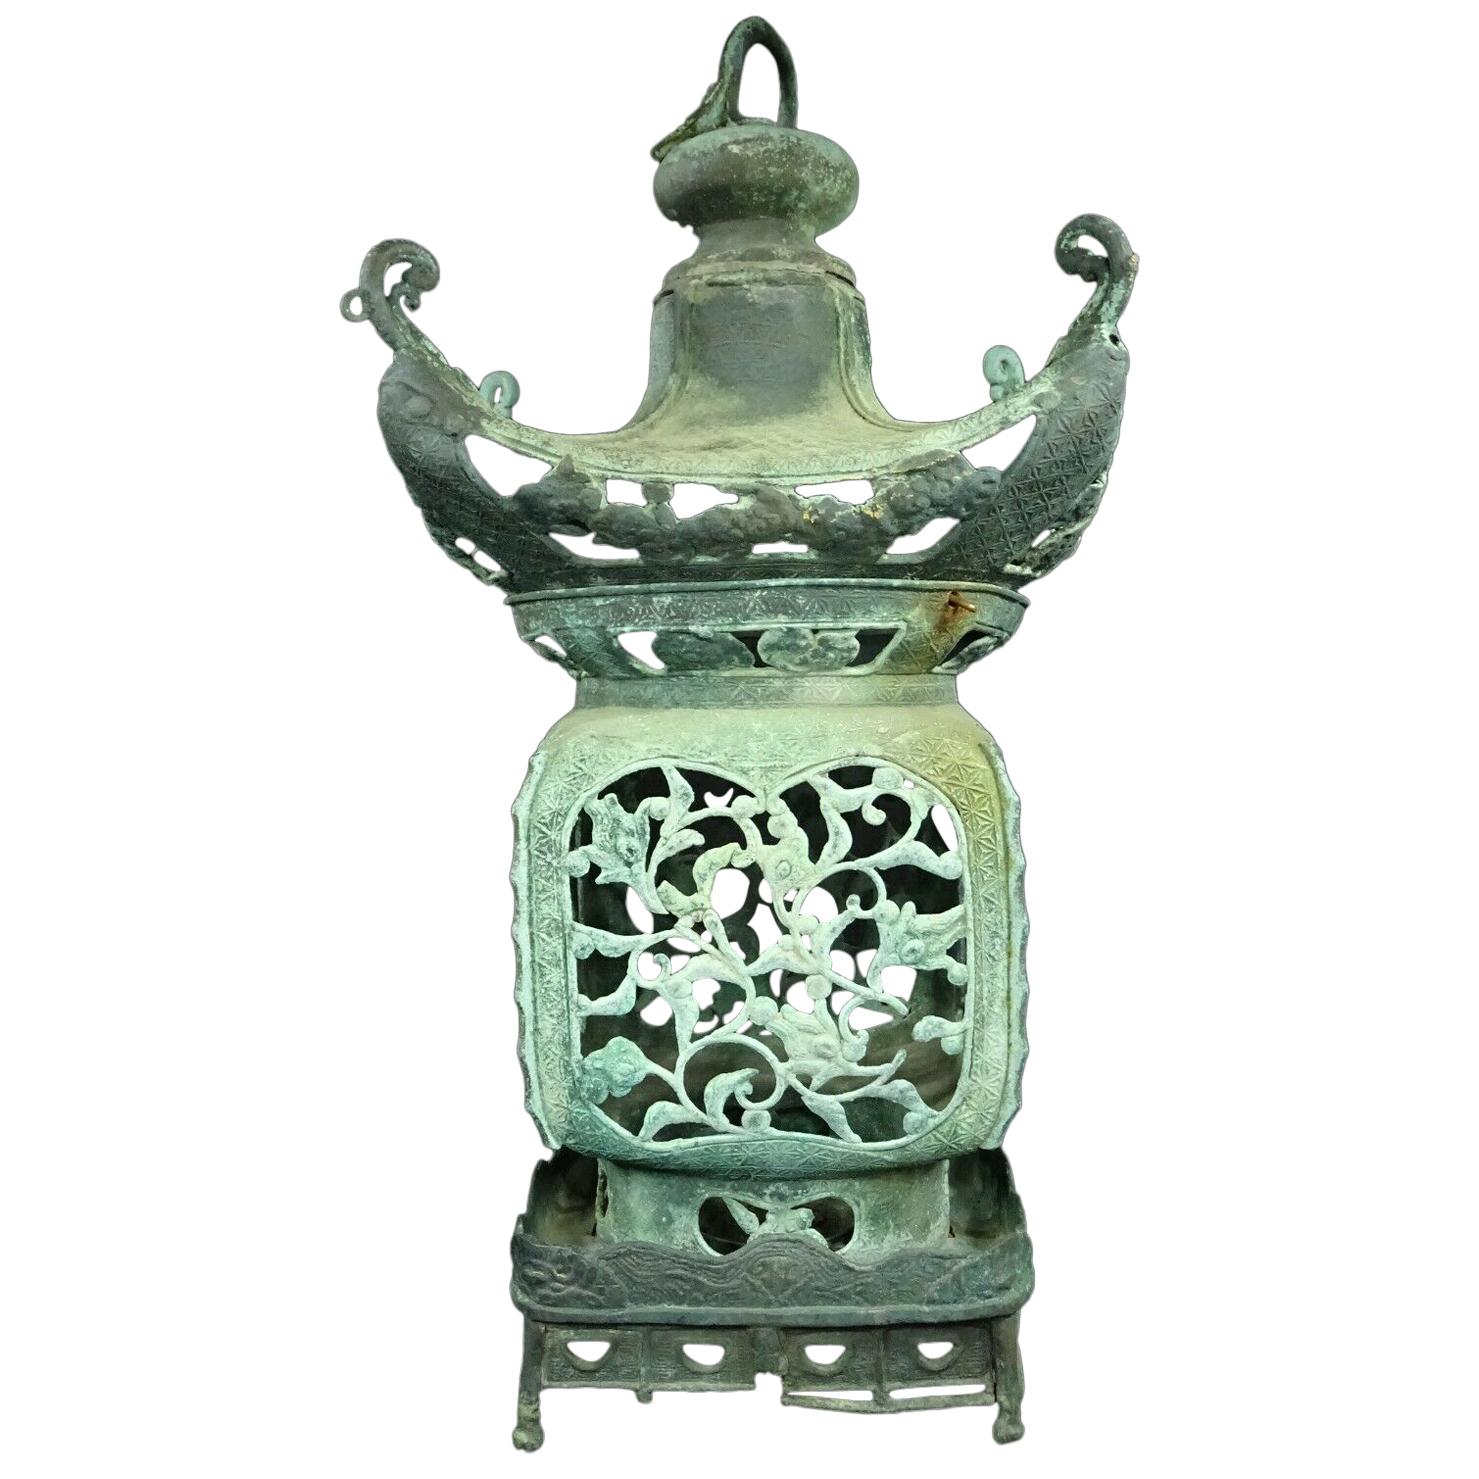 Japanese Antique Pagoda Tea House Bronze Lantern, Dragon Finial and Fine Details